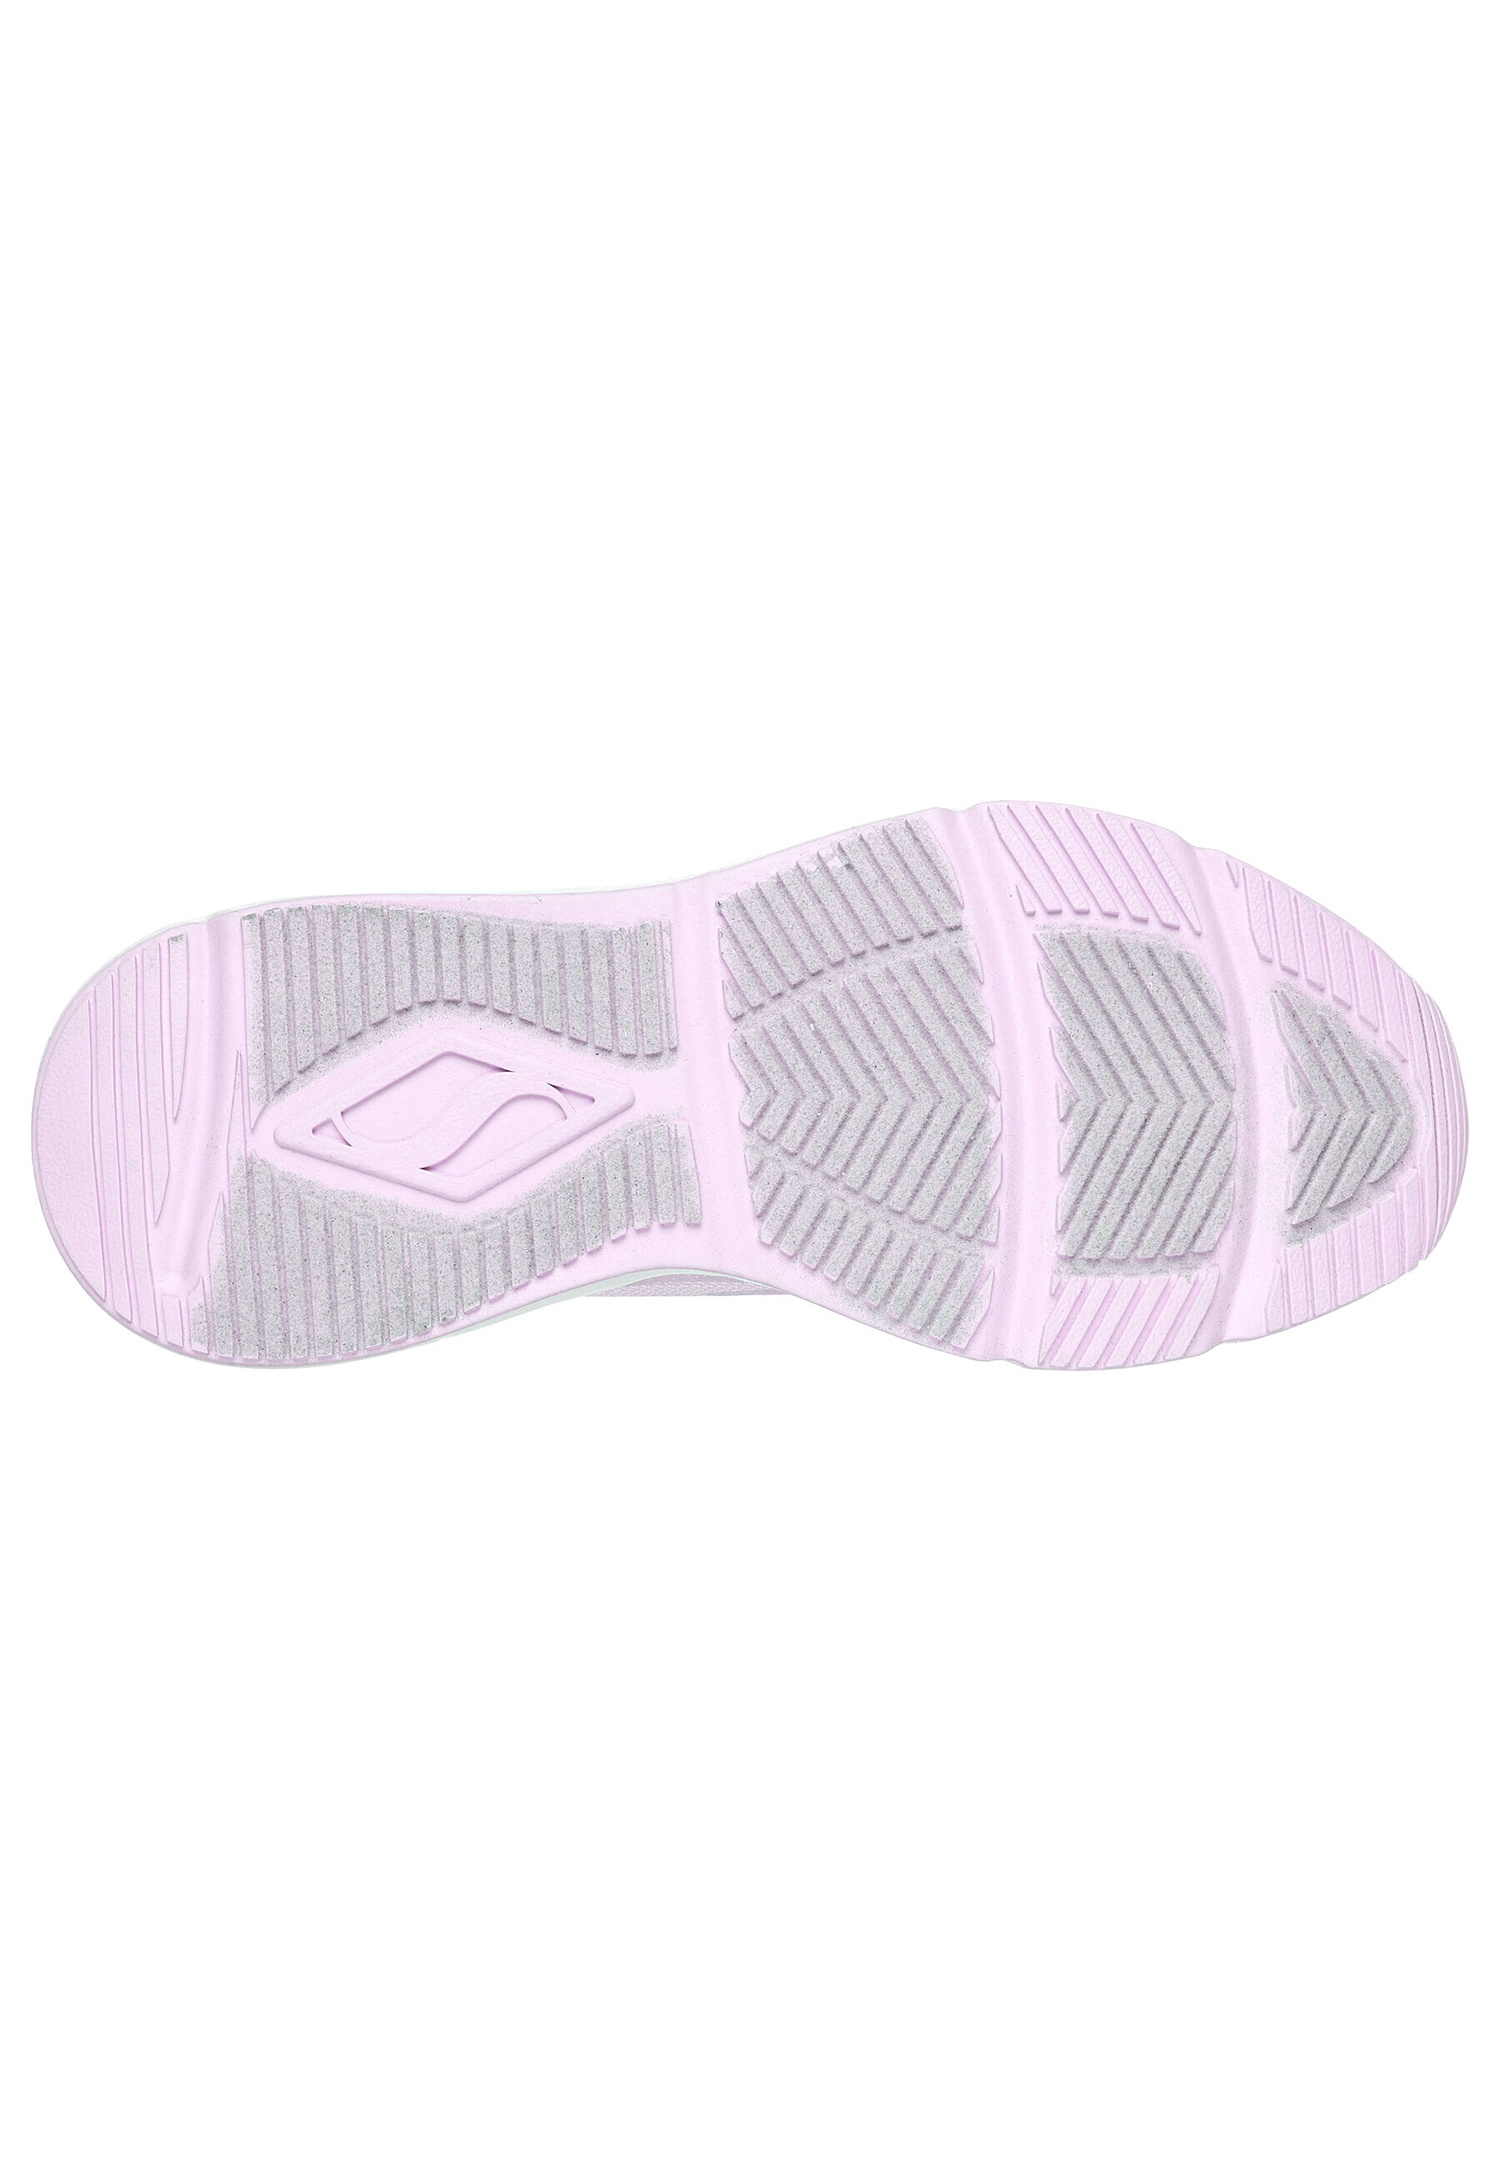 Skechers Street TRES-AIR - Glit-Airy Sneakers Damen pink 177411 LTPK 